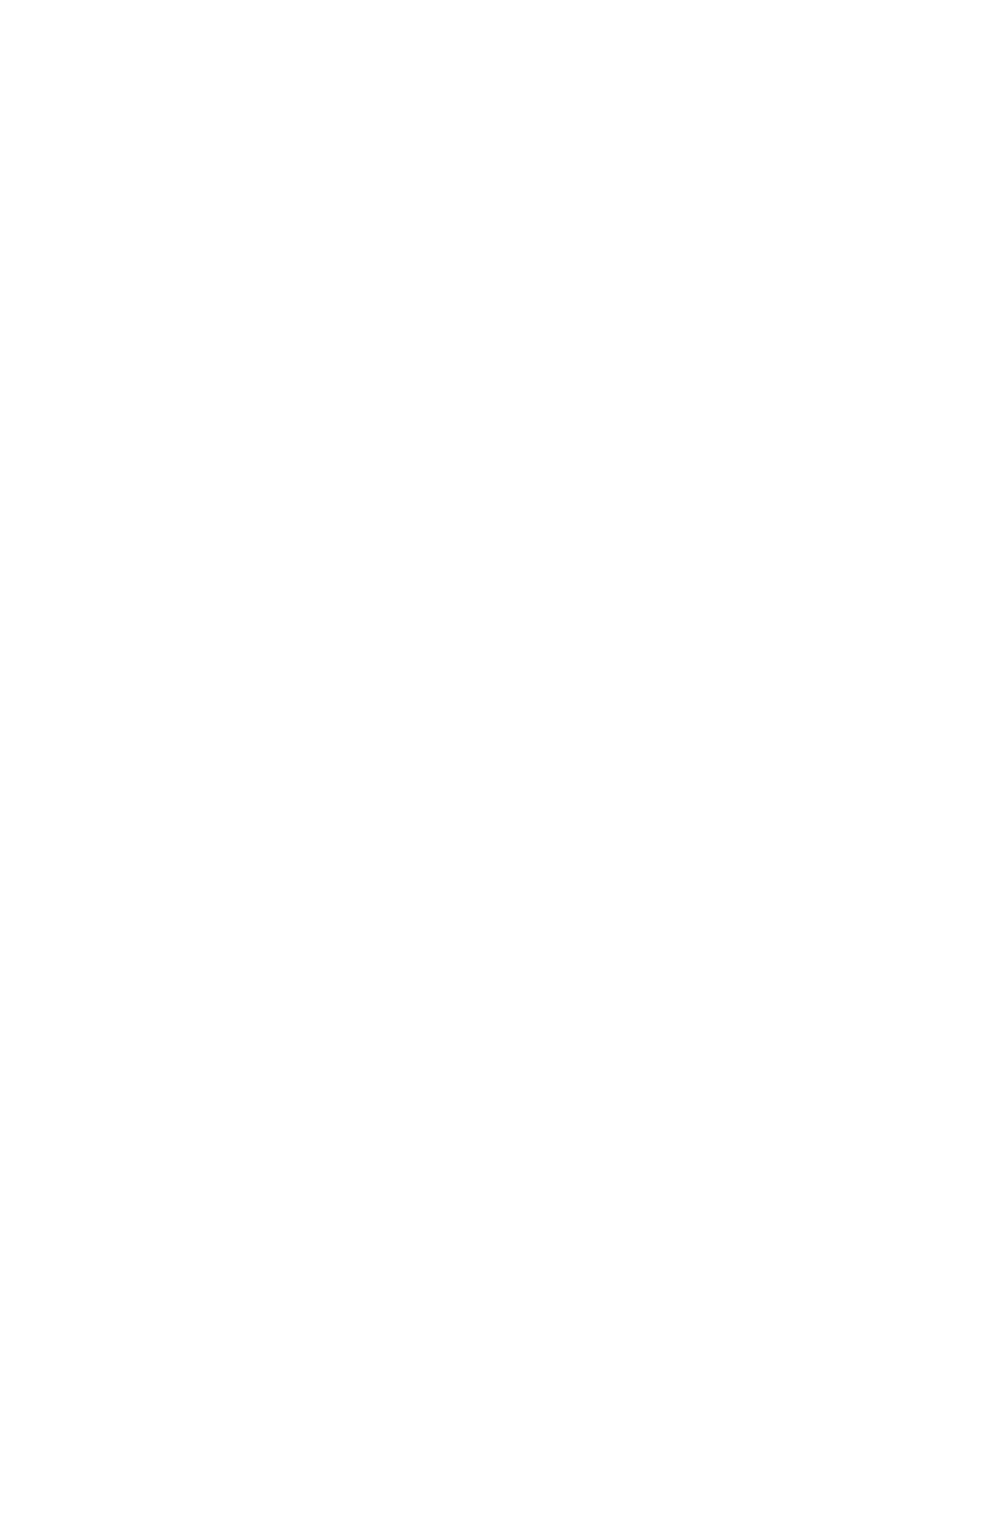 LumiraDx logo for dark backgrounds (transparent PNG)